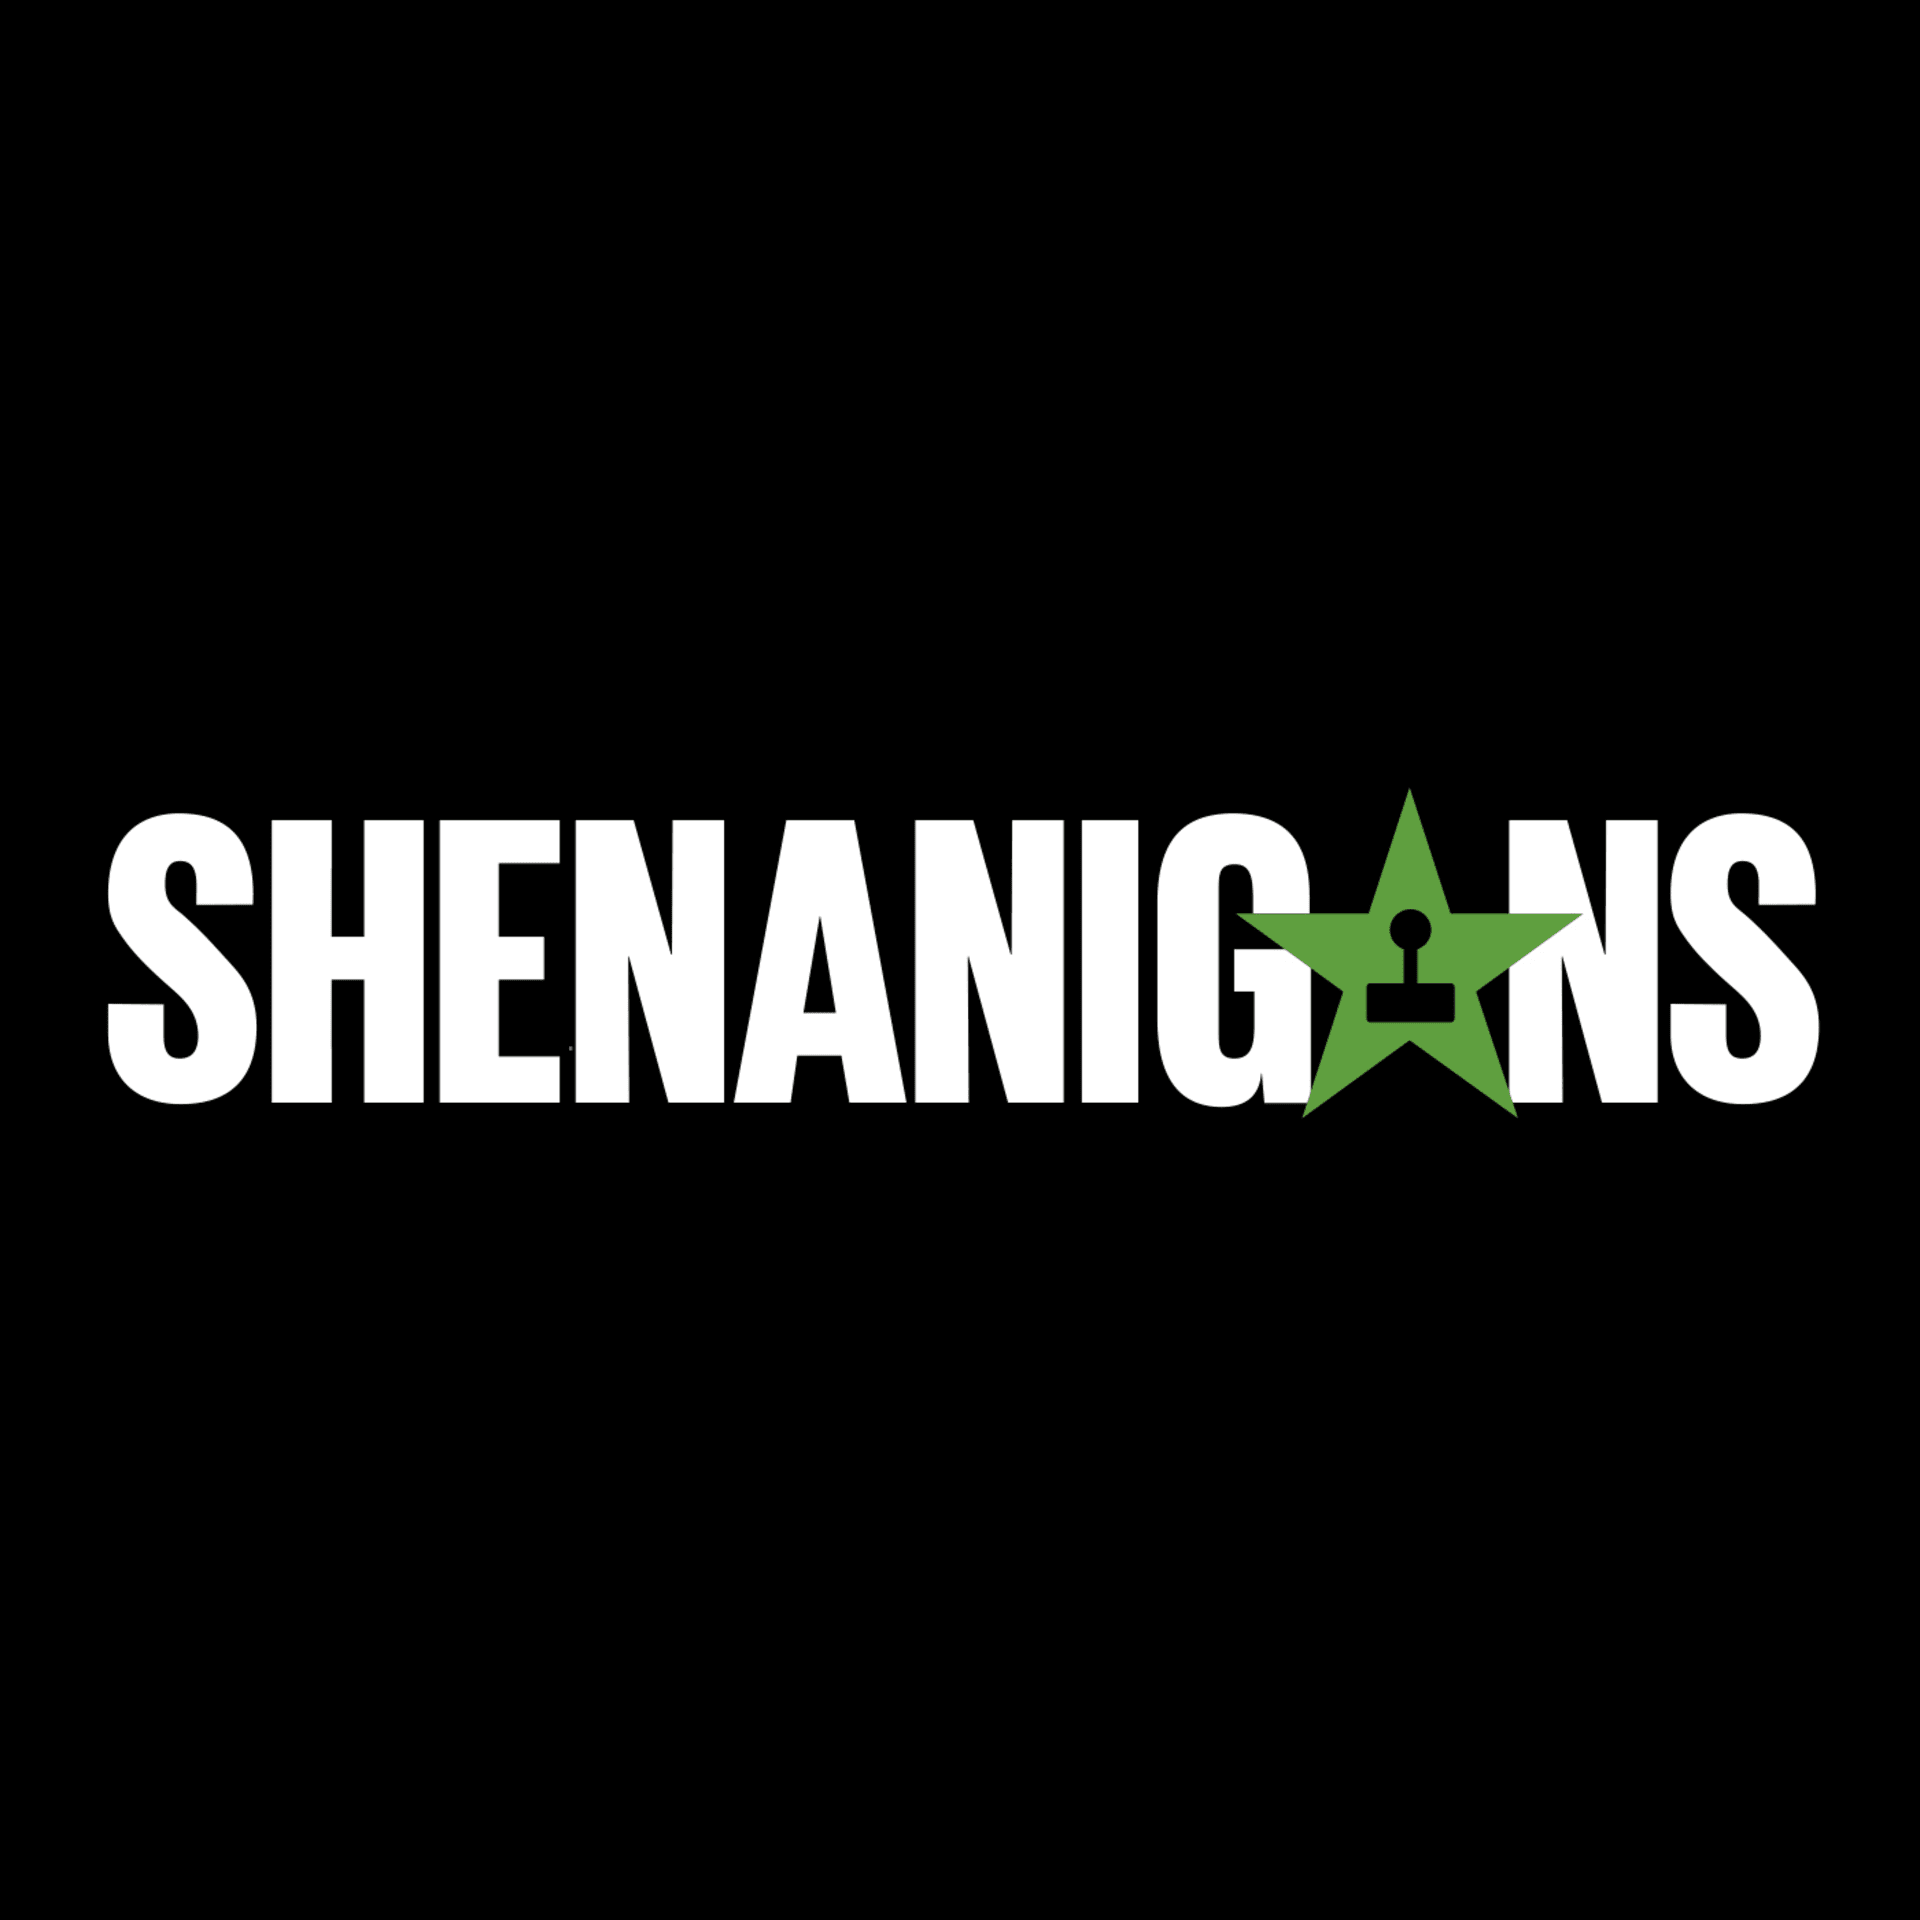 Shenanigans Logo - Series Shenanigans